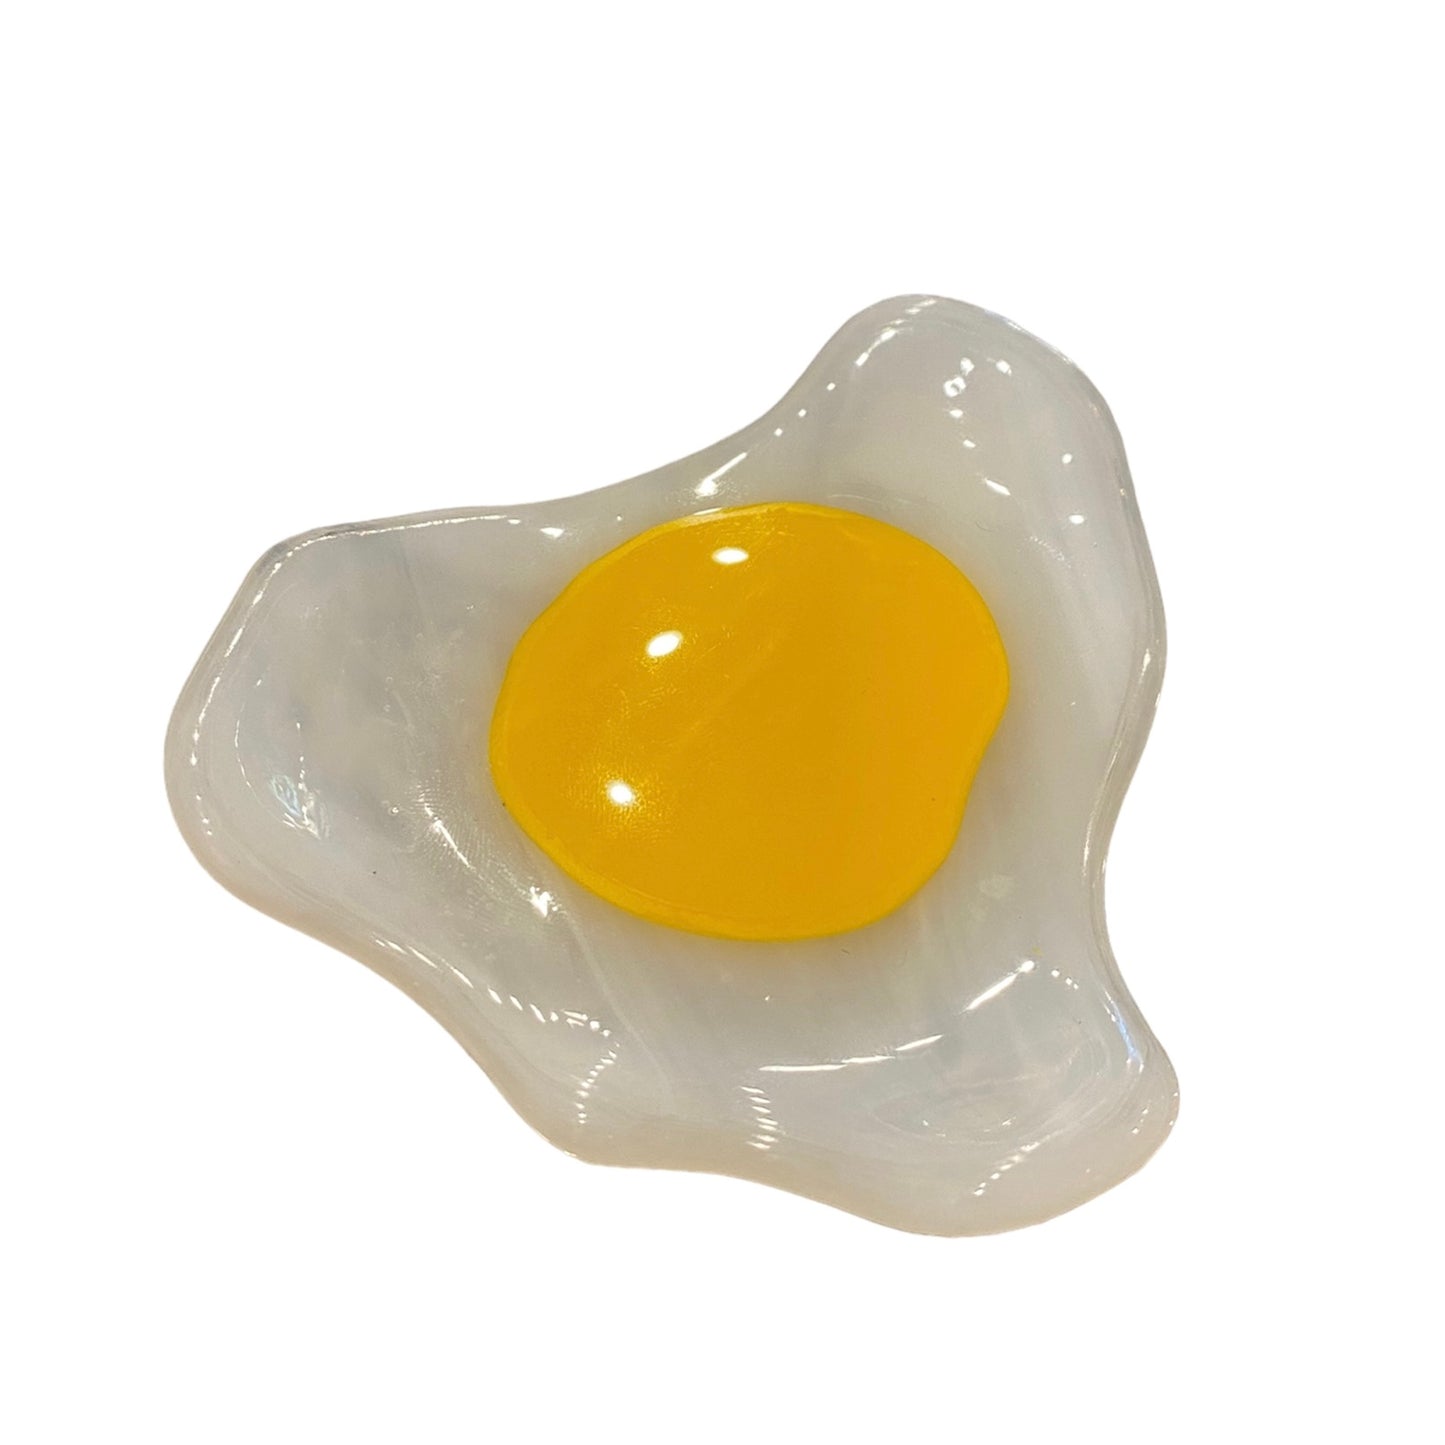 Handmade Glass Egg Dish by manic pixie dream squirrel